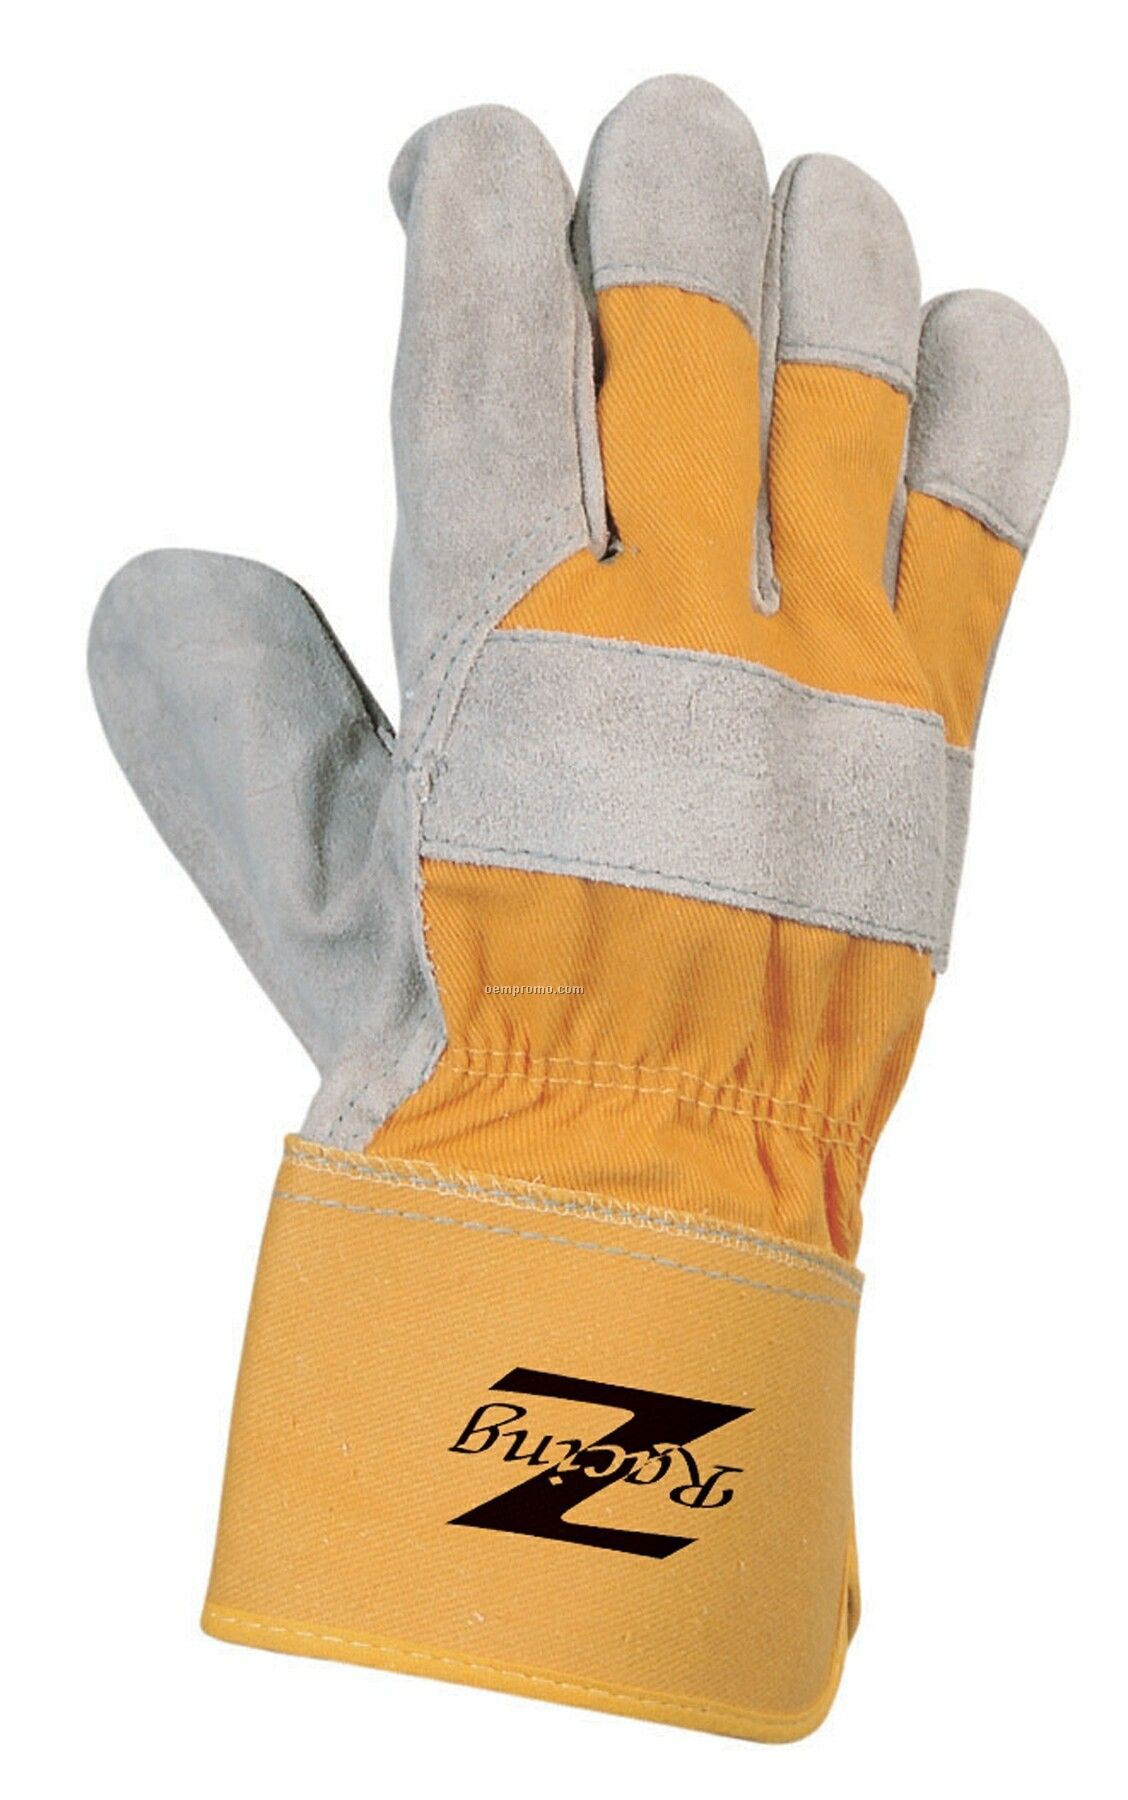 Premium Leather Palm Split Cowhide Glove With Gauntlet Cuff